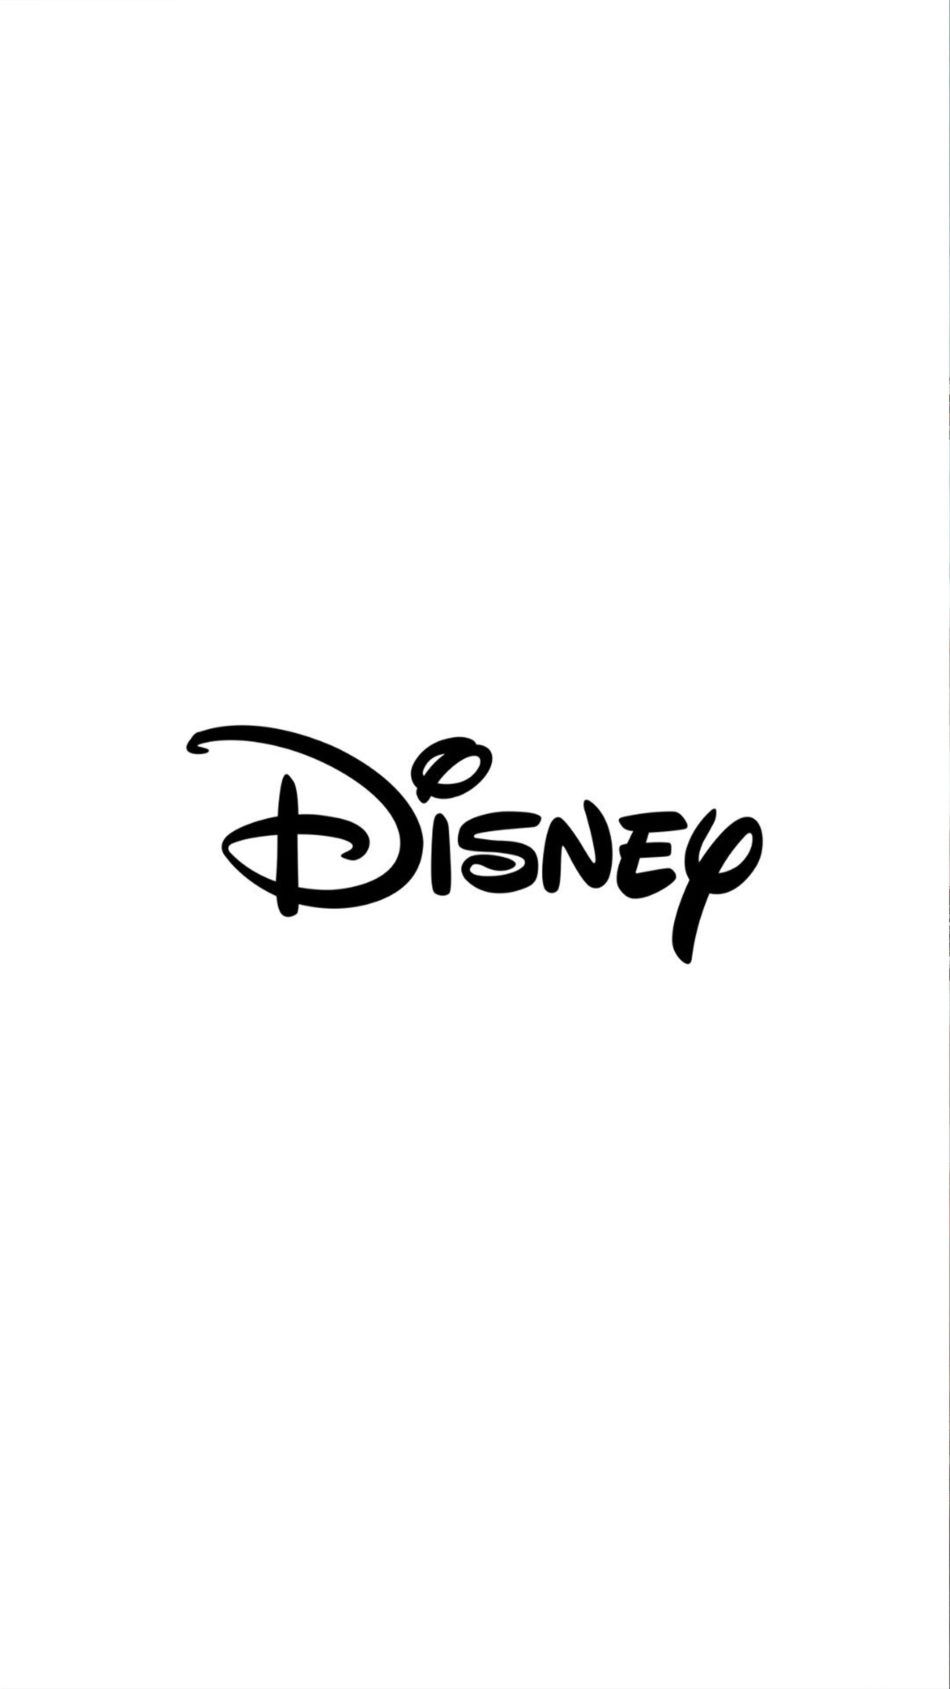 Disney Logo Wallpaper Free Disney Logo Background